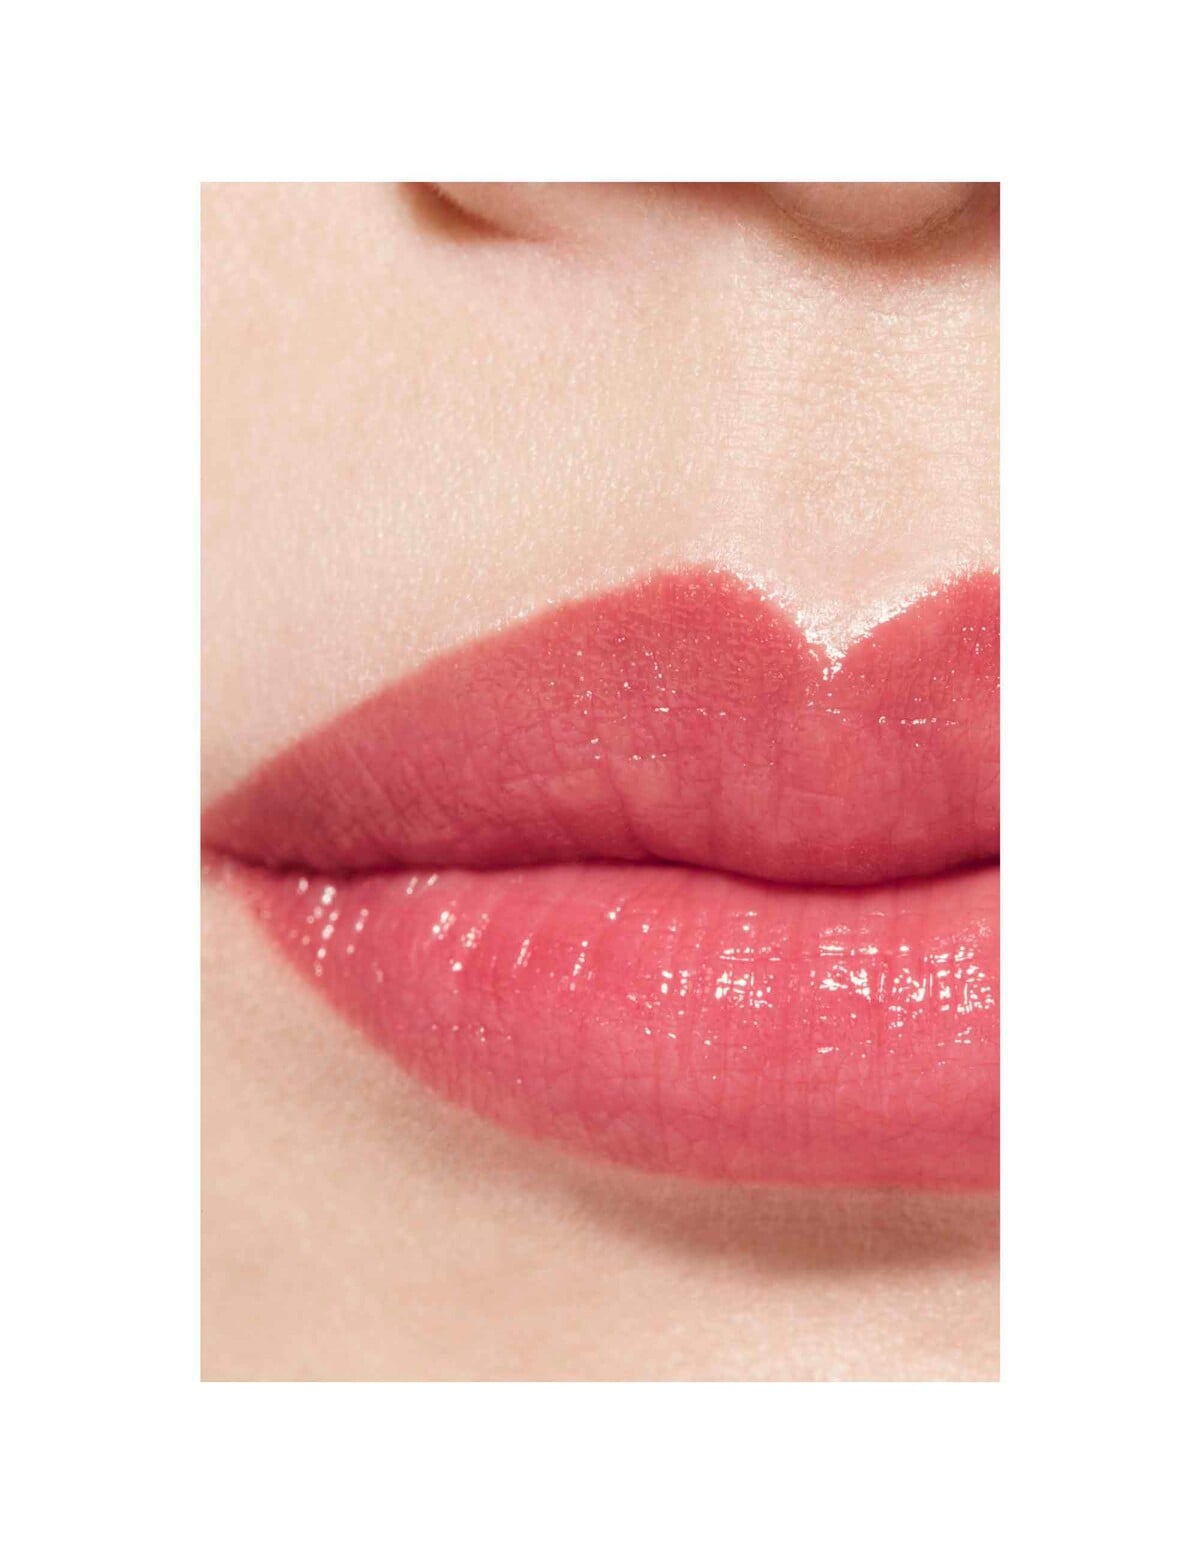 Nacific, Shine Mood Slick #04 Blow Kiss Lip Tint